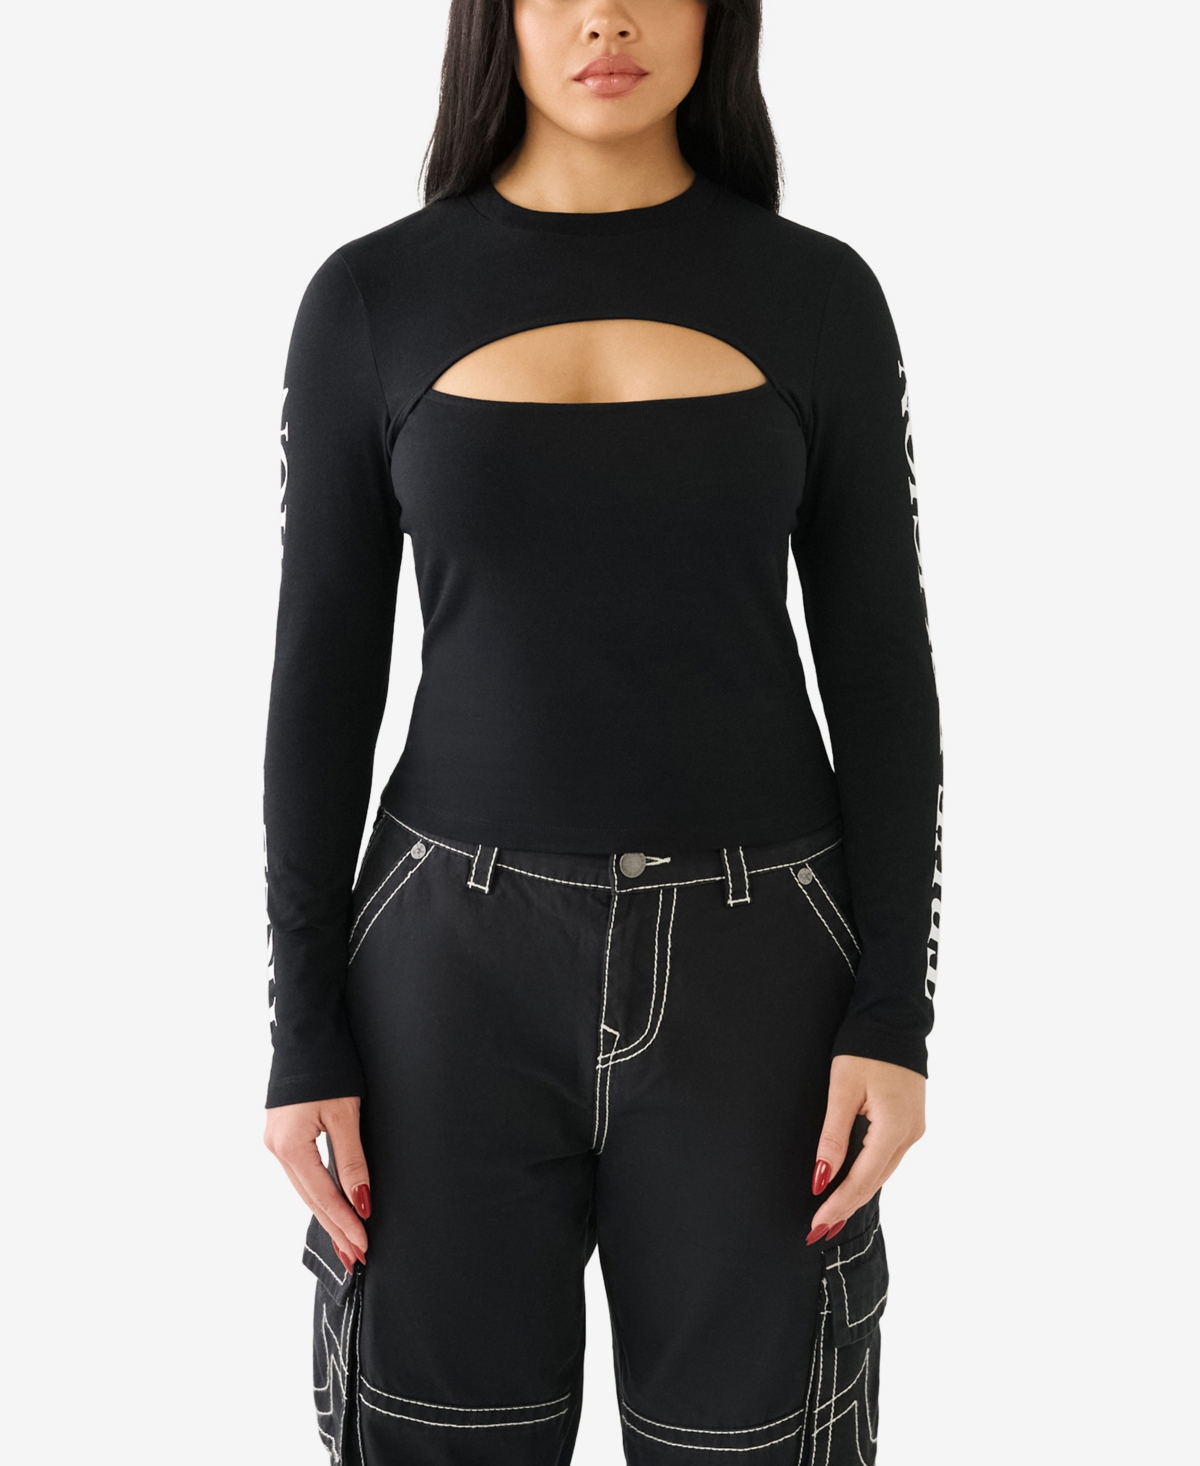 Women's Long Sleeve Cut Out T-shirt - Jet Black